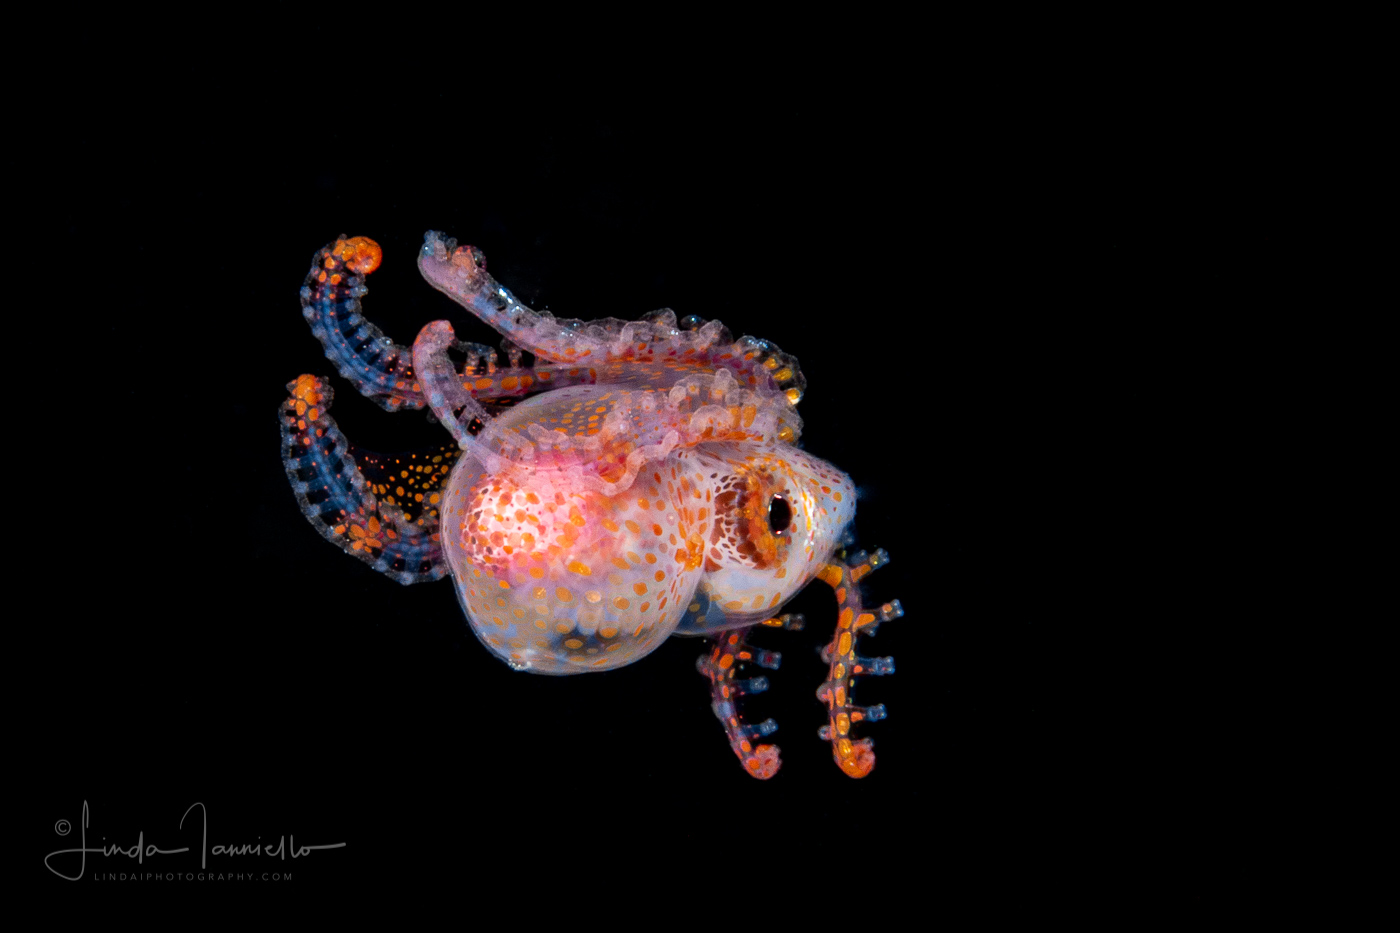 Male Blanket Octopus - Tremoctopus violaceus